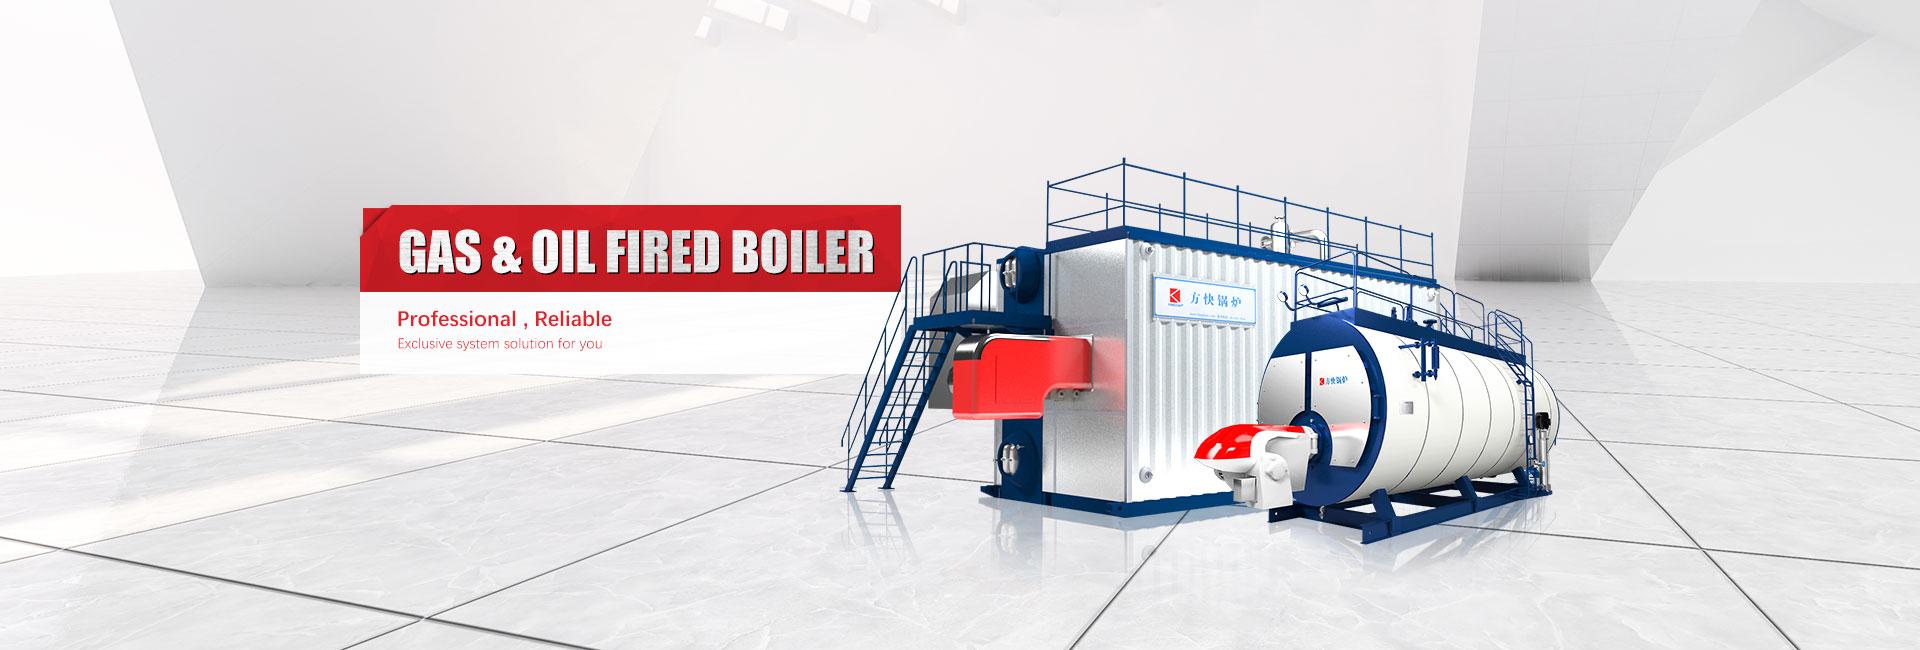 High Efficiency Gas Steam Boiler - Industrial Boiler Manufacturers